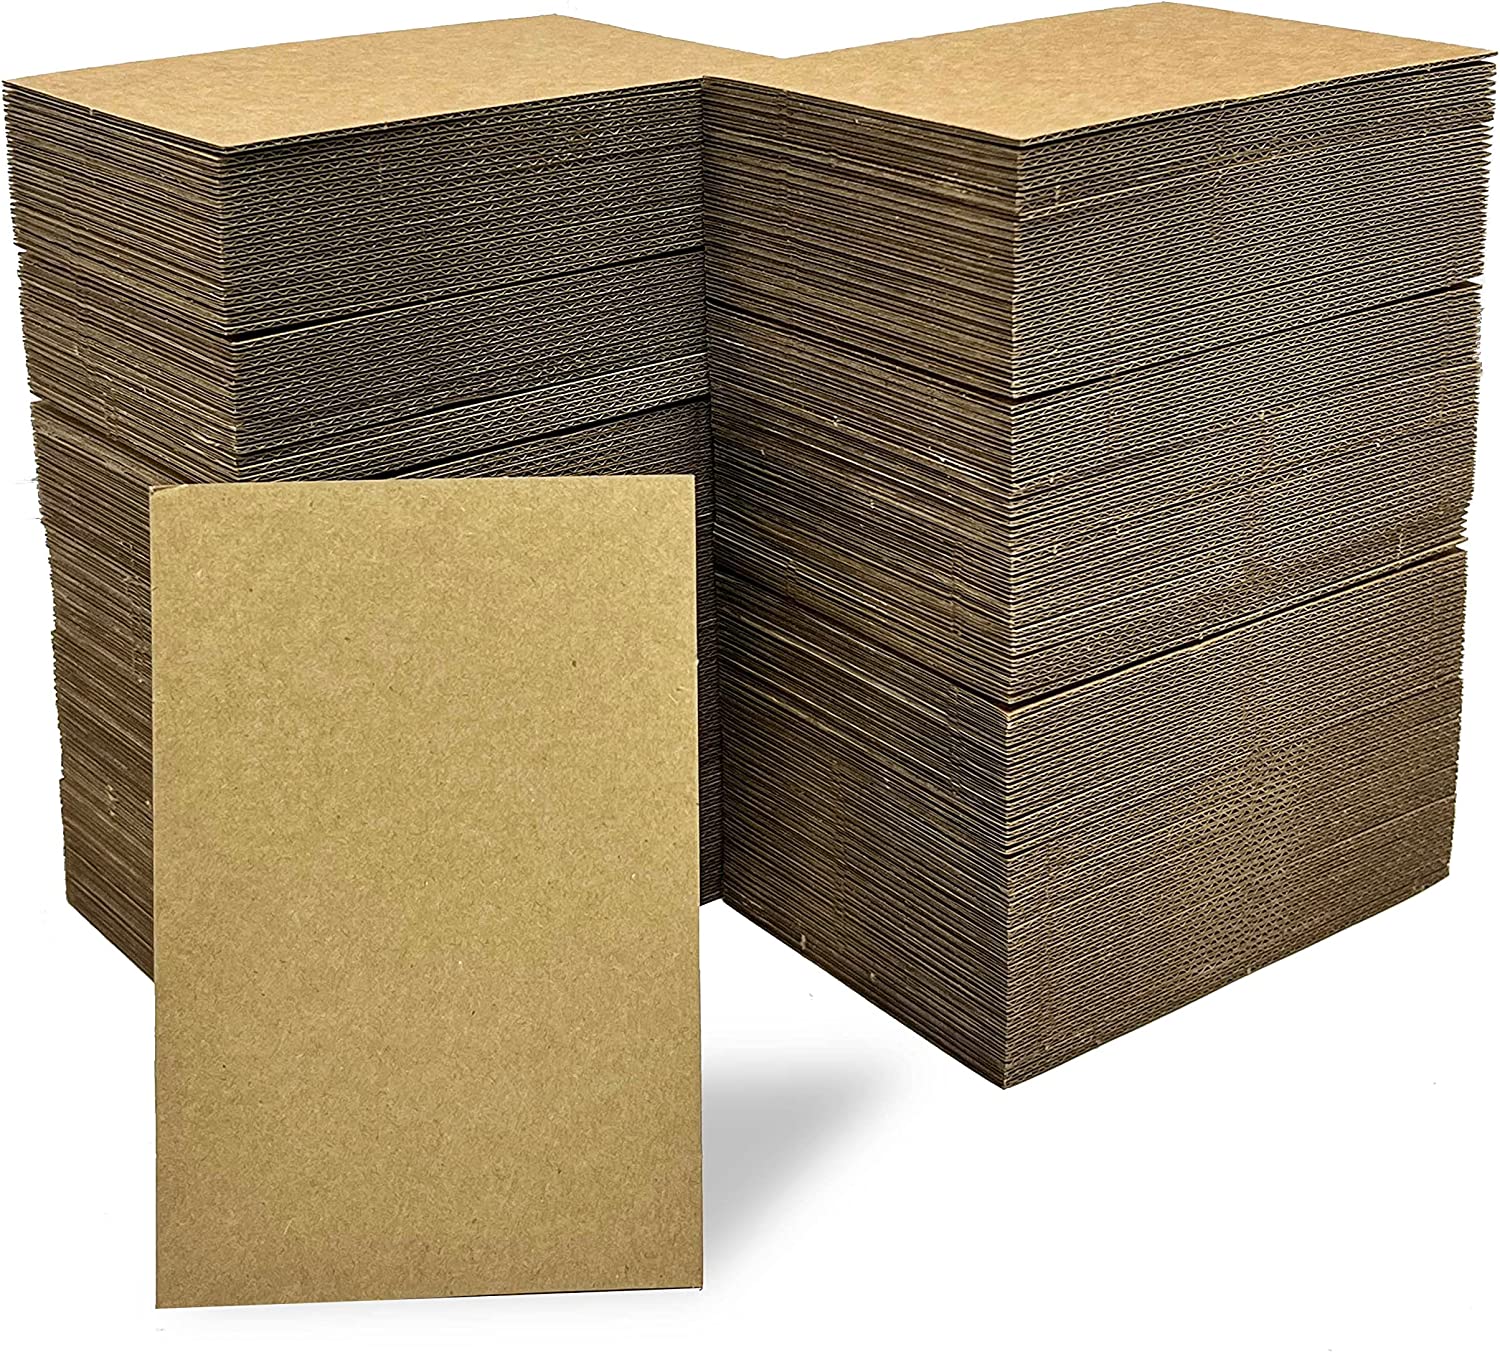 100pcs 8 x 10 Corrugated Cardboard Sheets 1/8 Thick Flat Filler